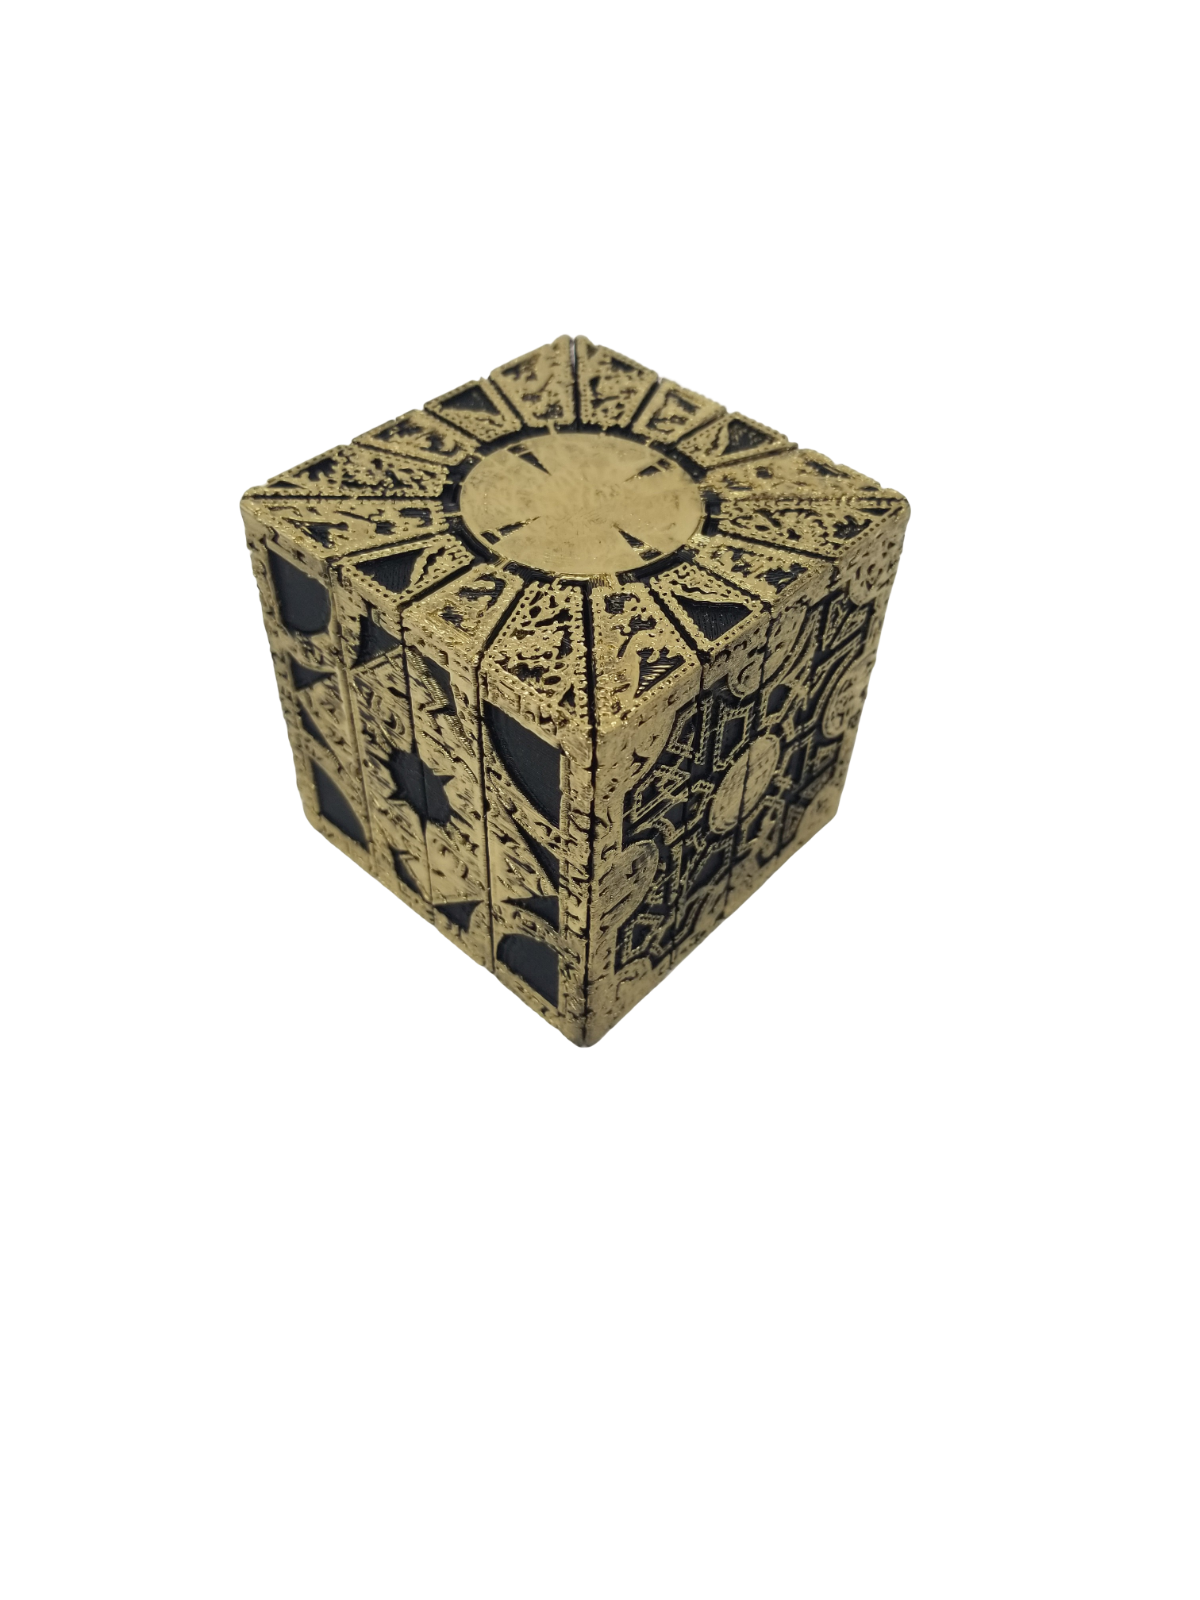 Hellraiser Cube Puzzle Box Lament Configuration  Functional Pinhead Prop Horror  Без бренда - фотография #6